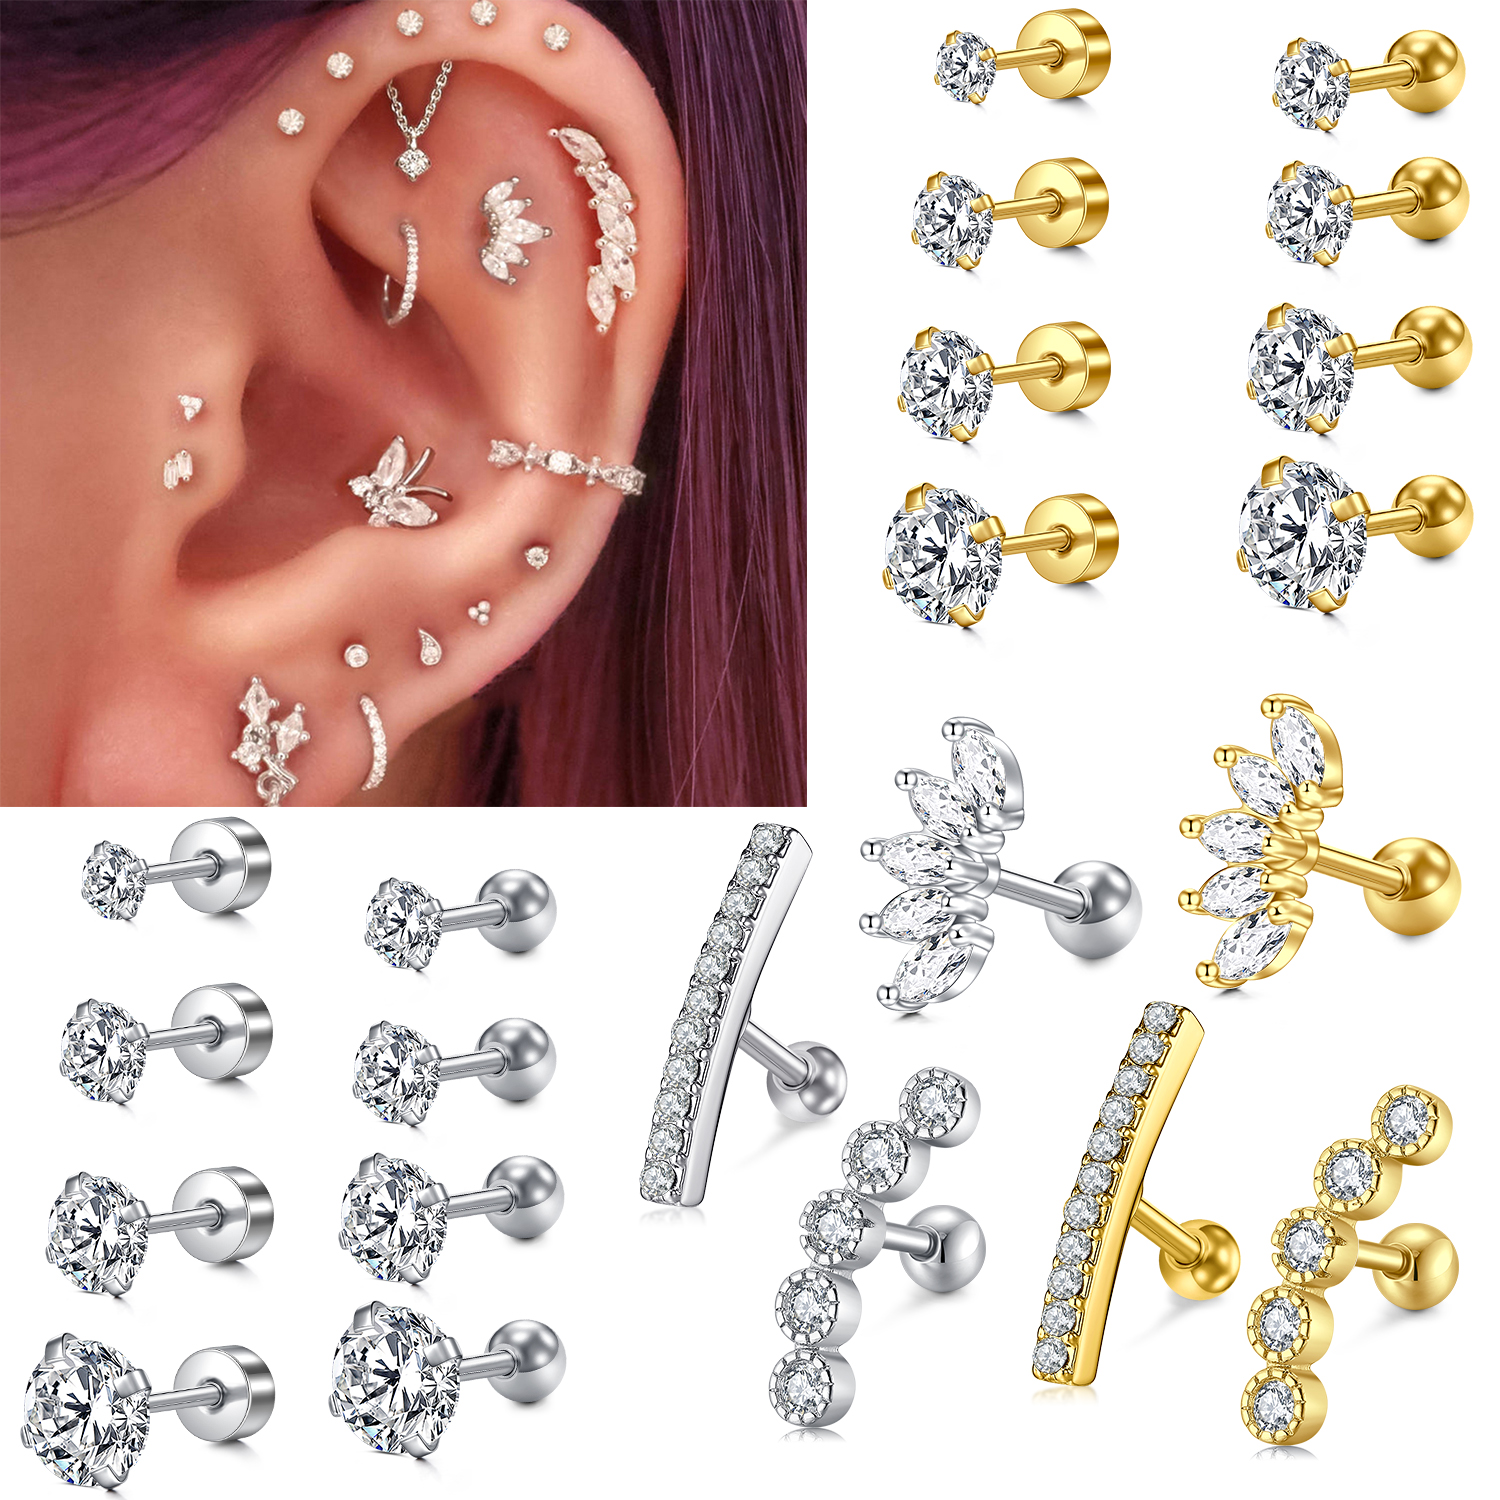 Ear piercing earrings set / Cartillage Earrings Batch 2 | Shopee Philippines-sgquangbinhtourist.com.vn